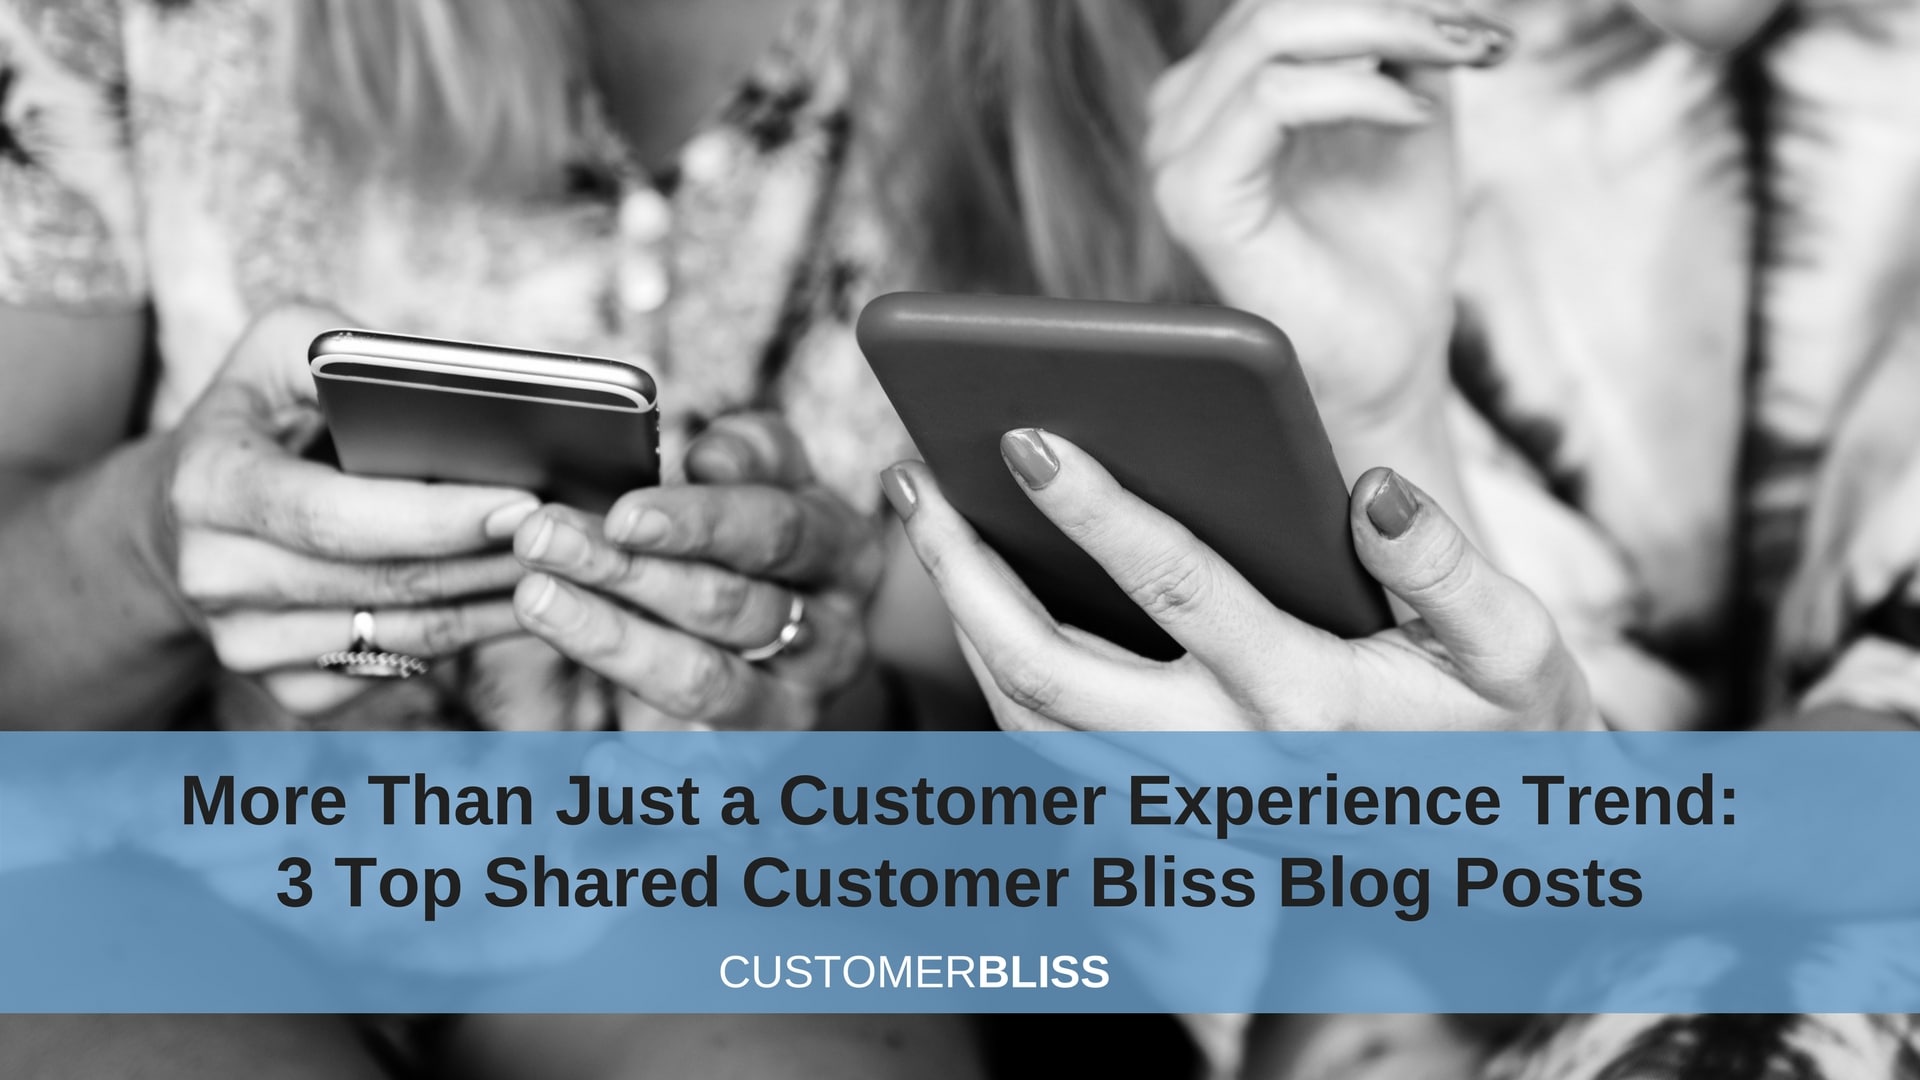 3 Top Shared Customer Bliss Blog Posts